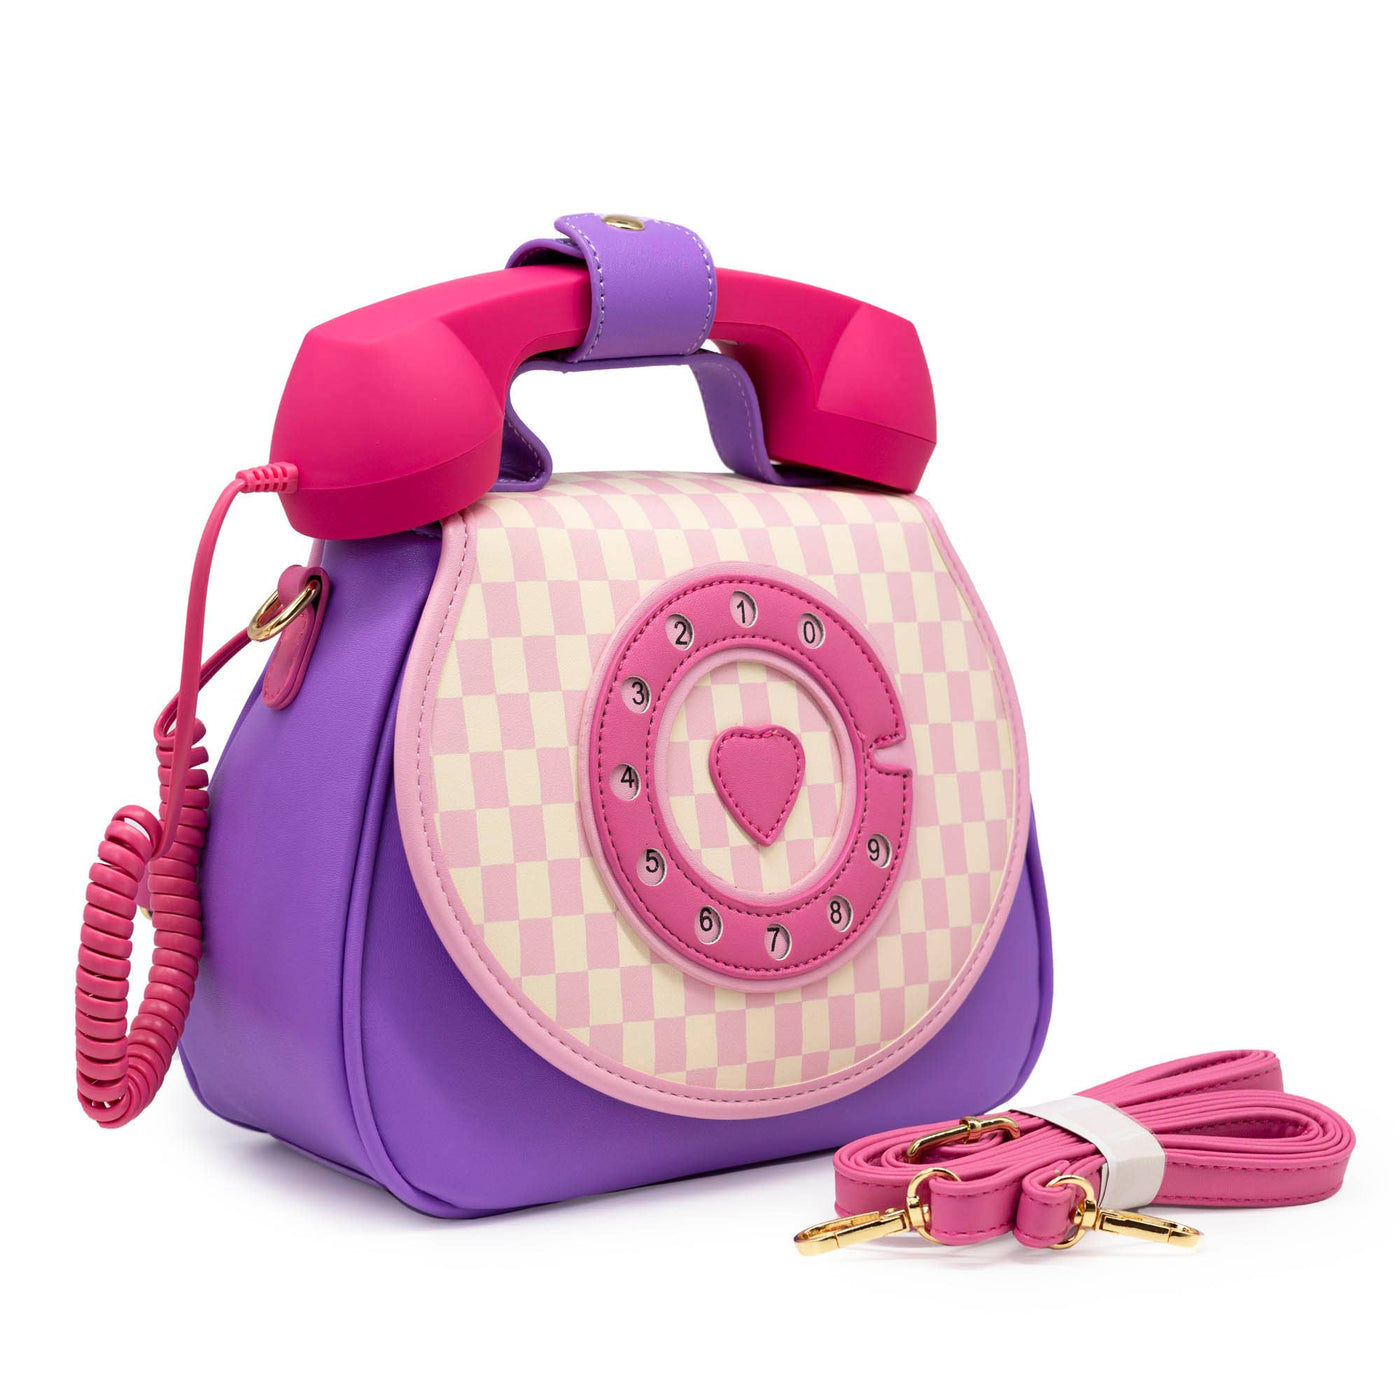 Bewaltz - Ring Ring Phone Convertible Handbag - Pastel Checkerboard